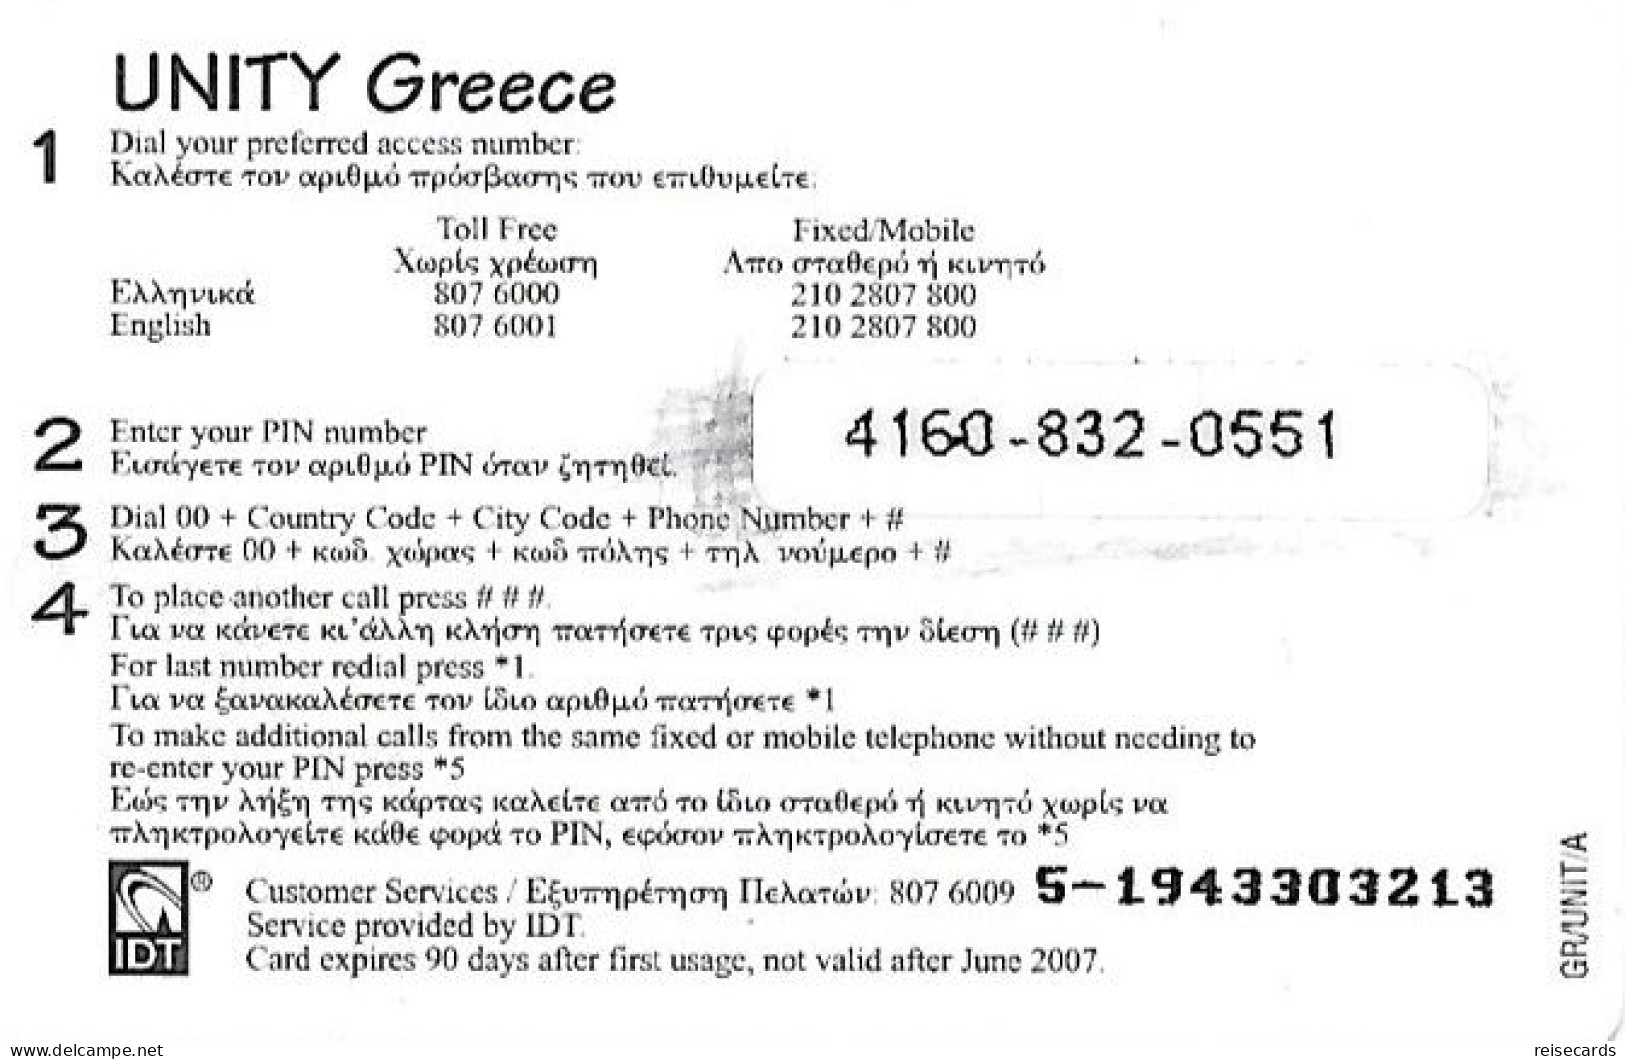 Greece: Prepaid IDT Unity 06.07 - Grecia